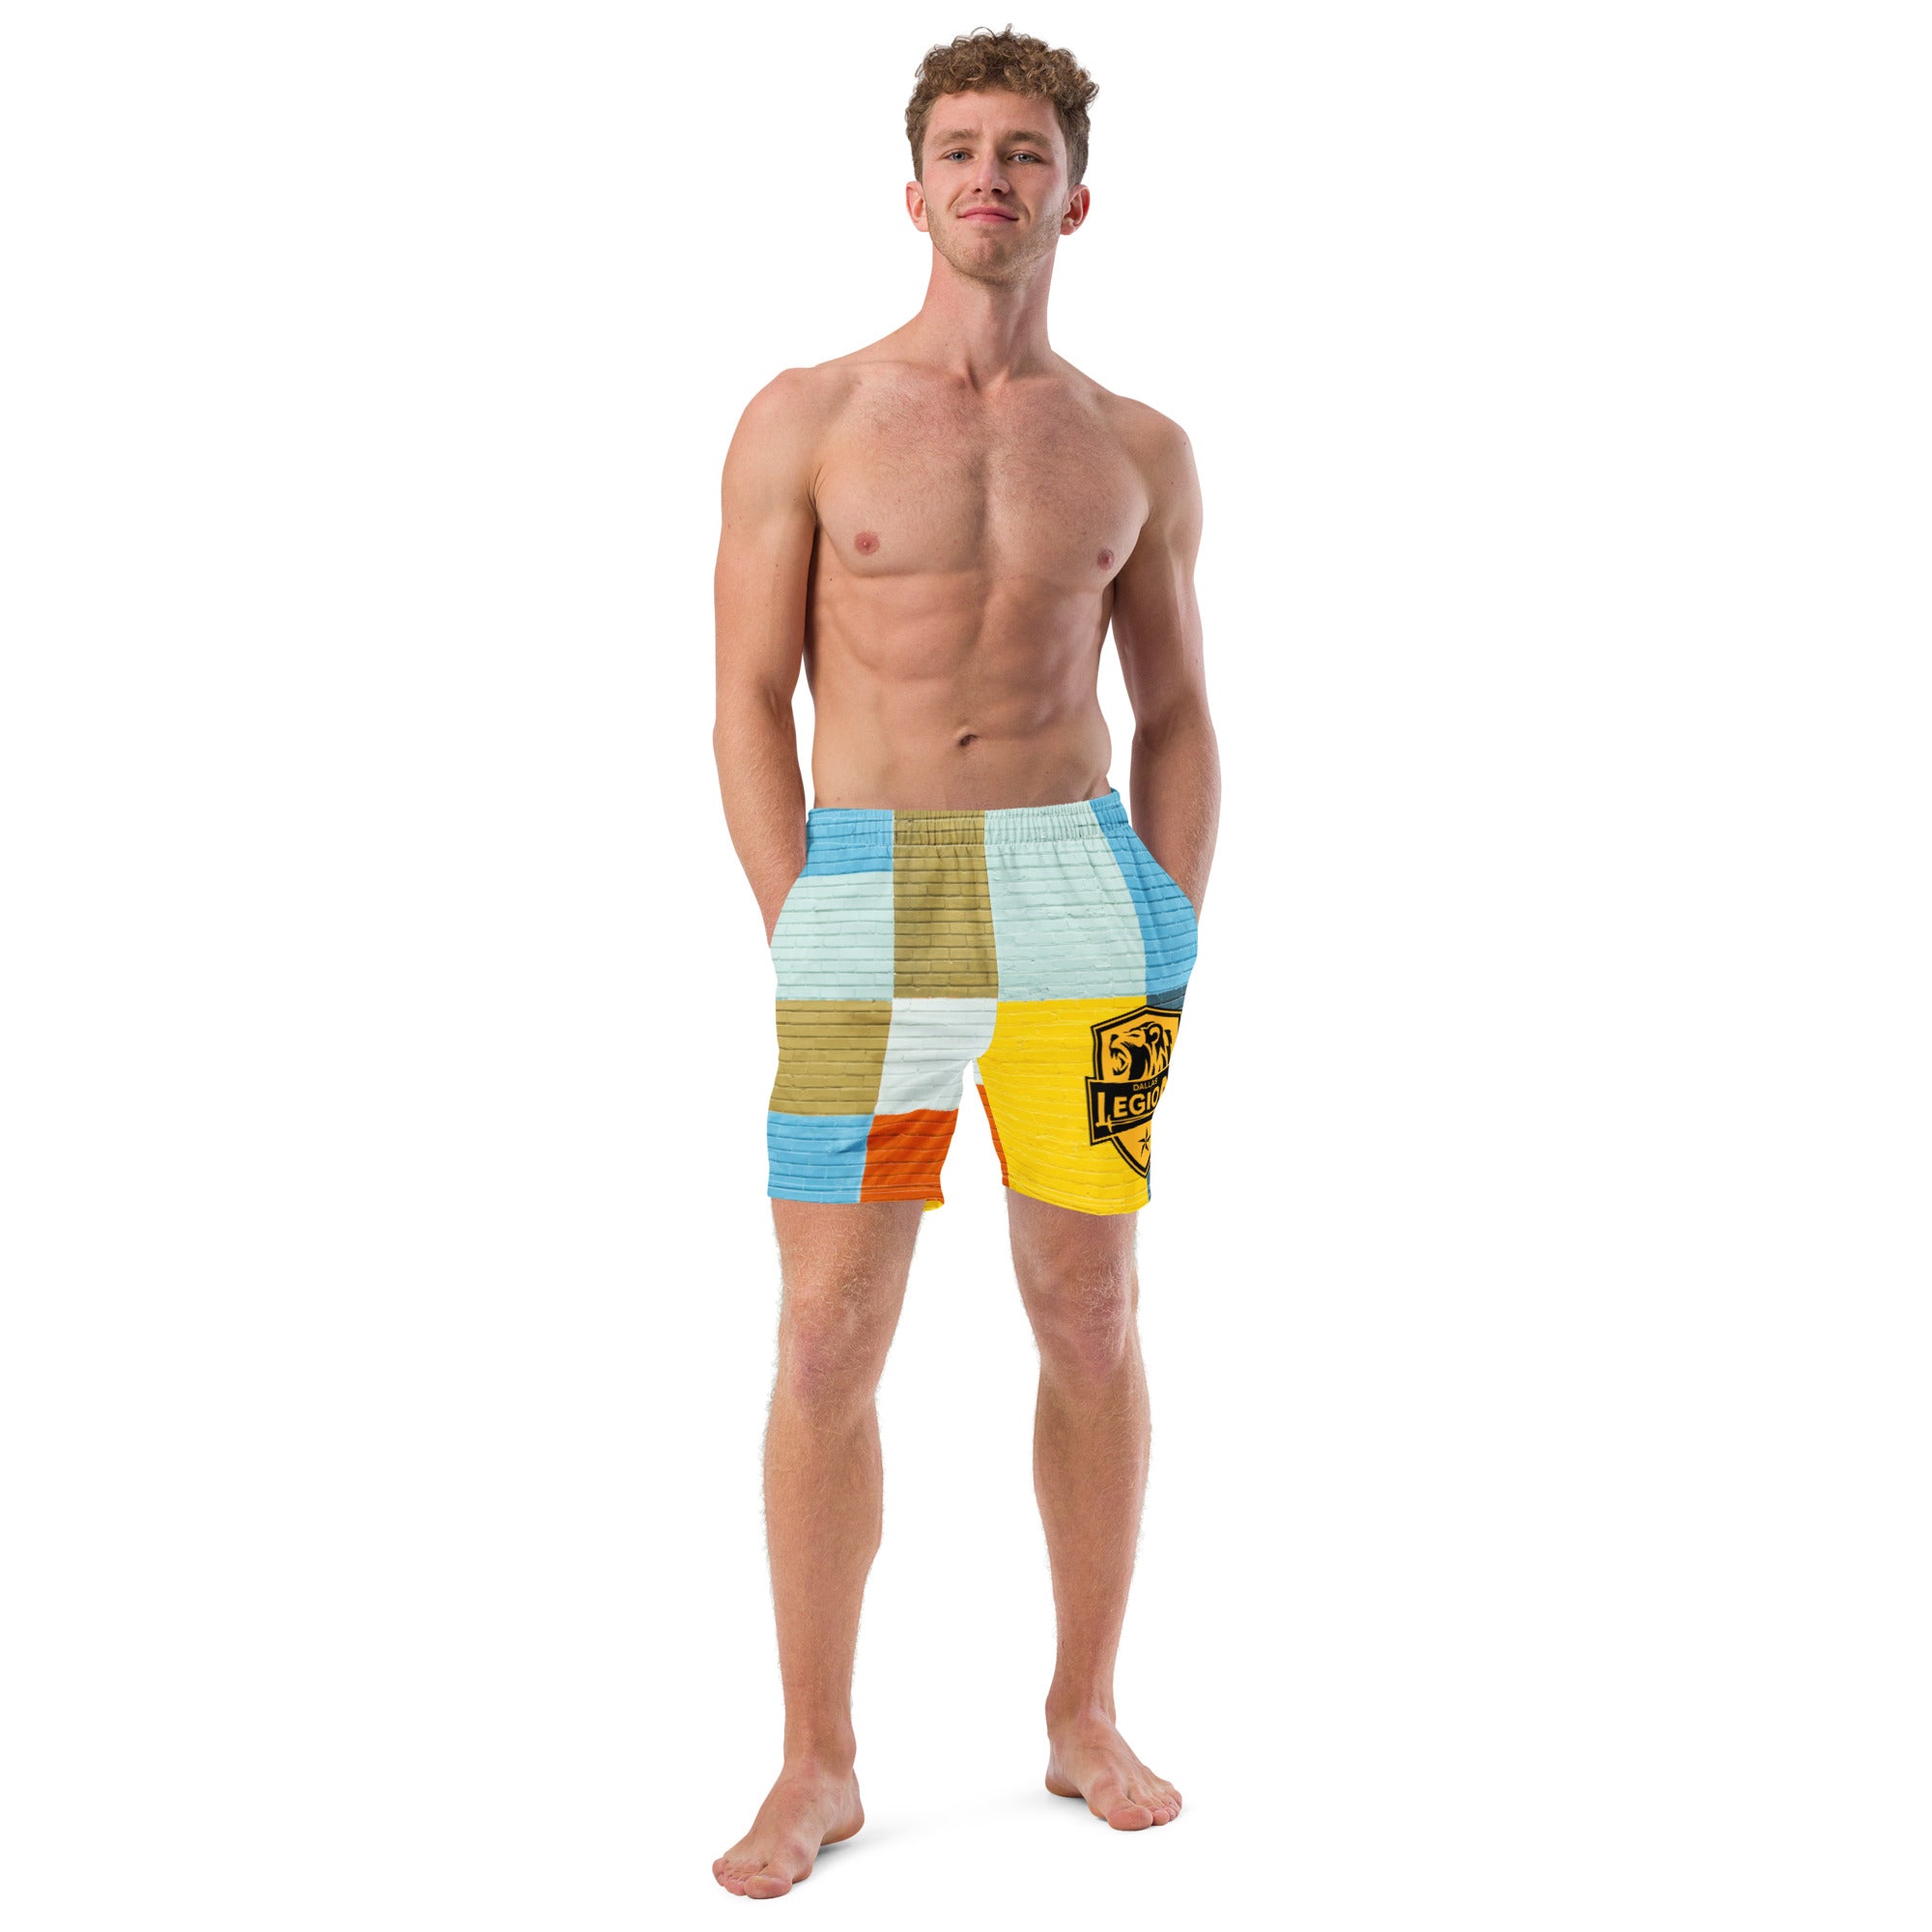 Men's swim trunks - Plaid